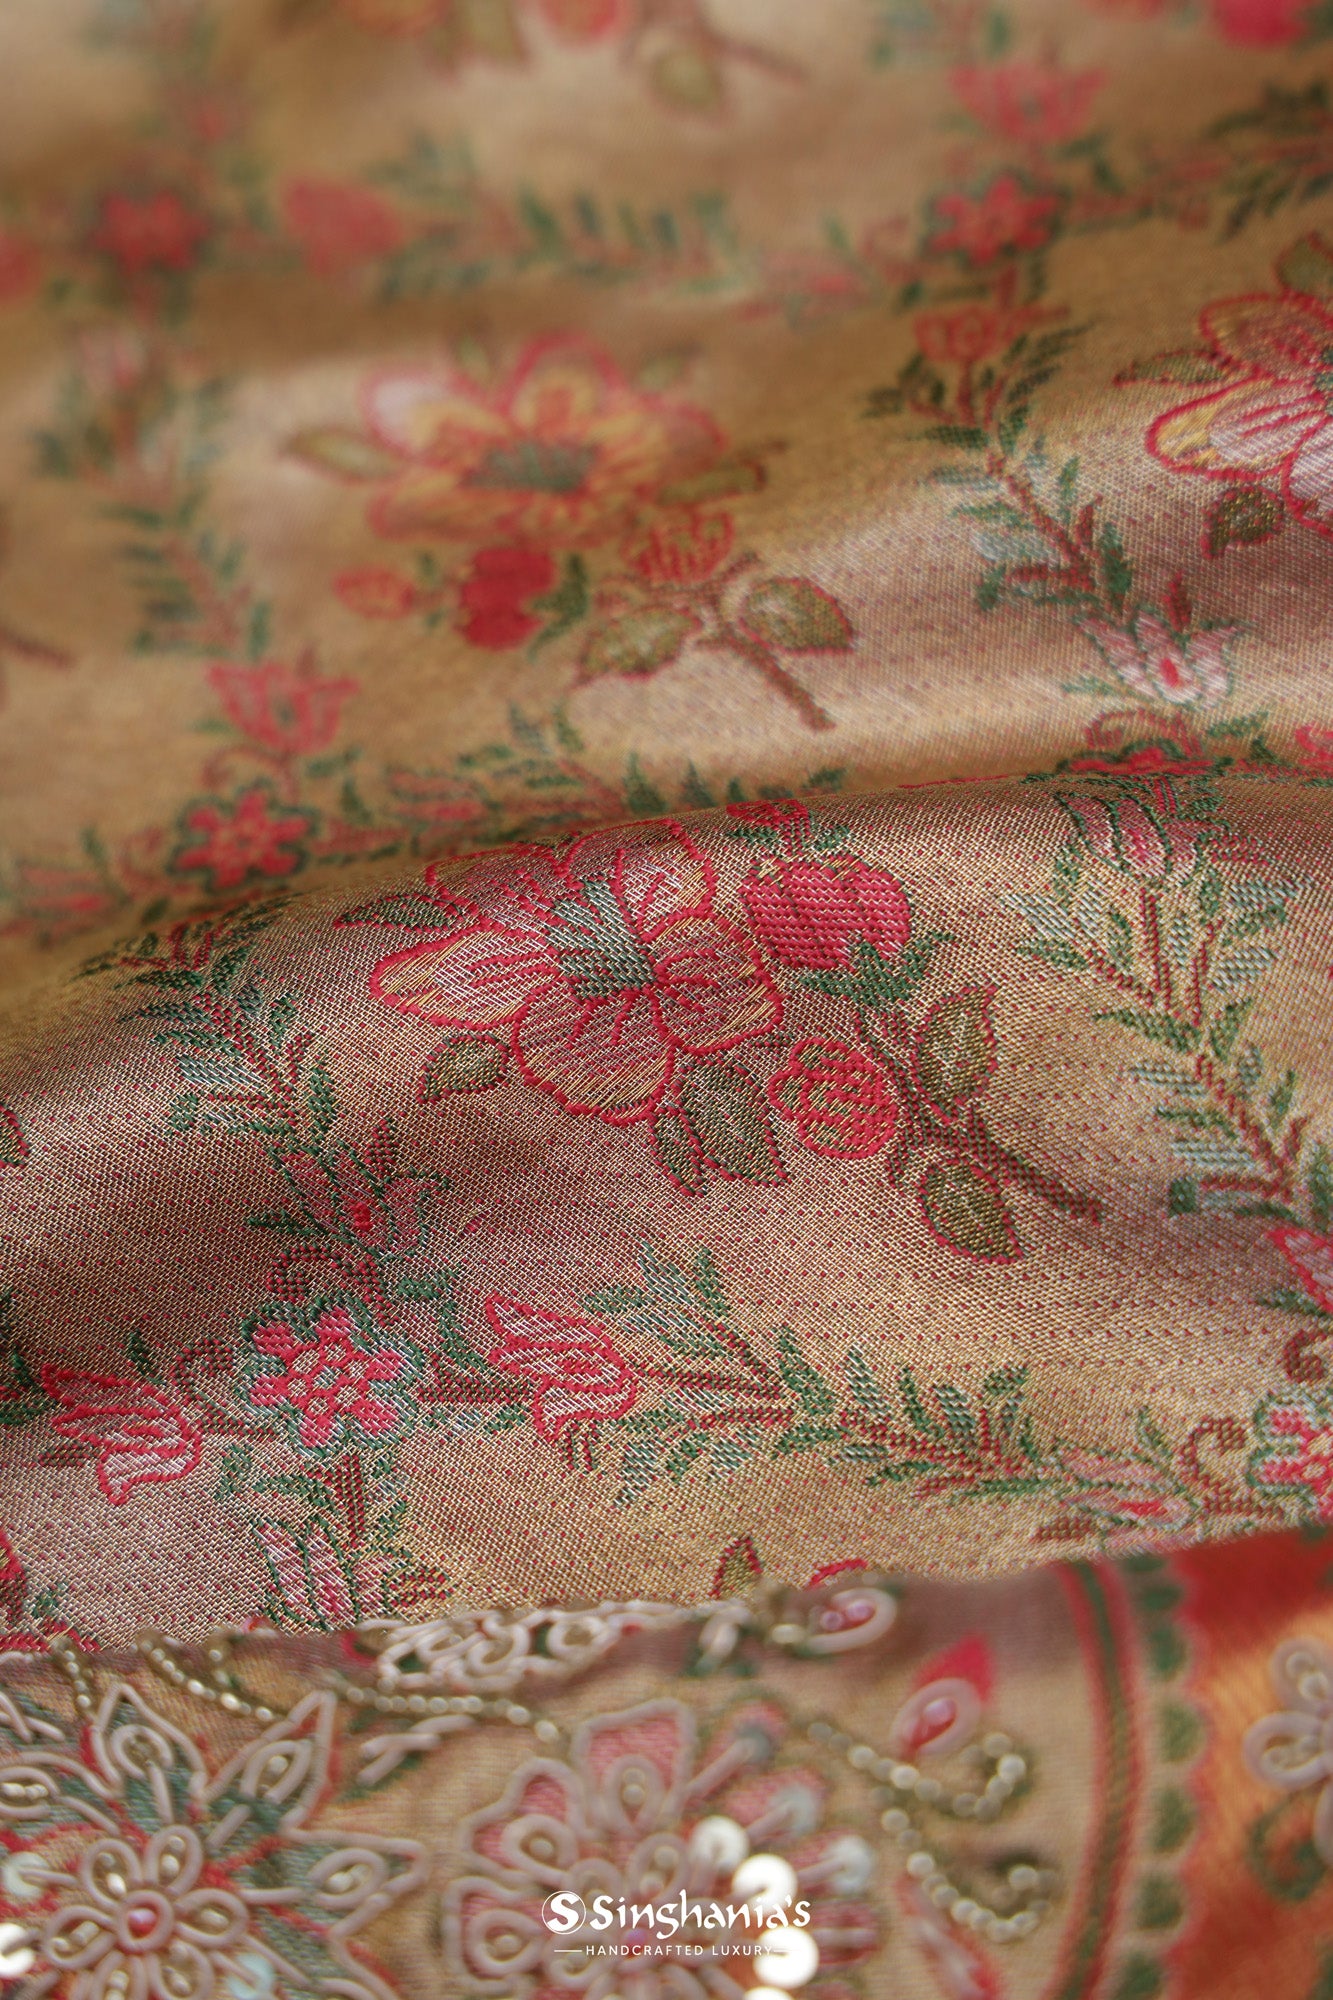 Earthy Yellow Kanjivaram Silk Saree With Hand Embroidery